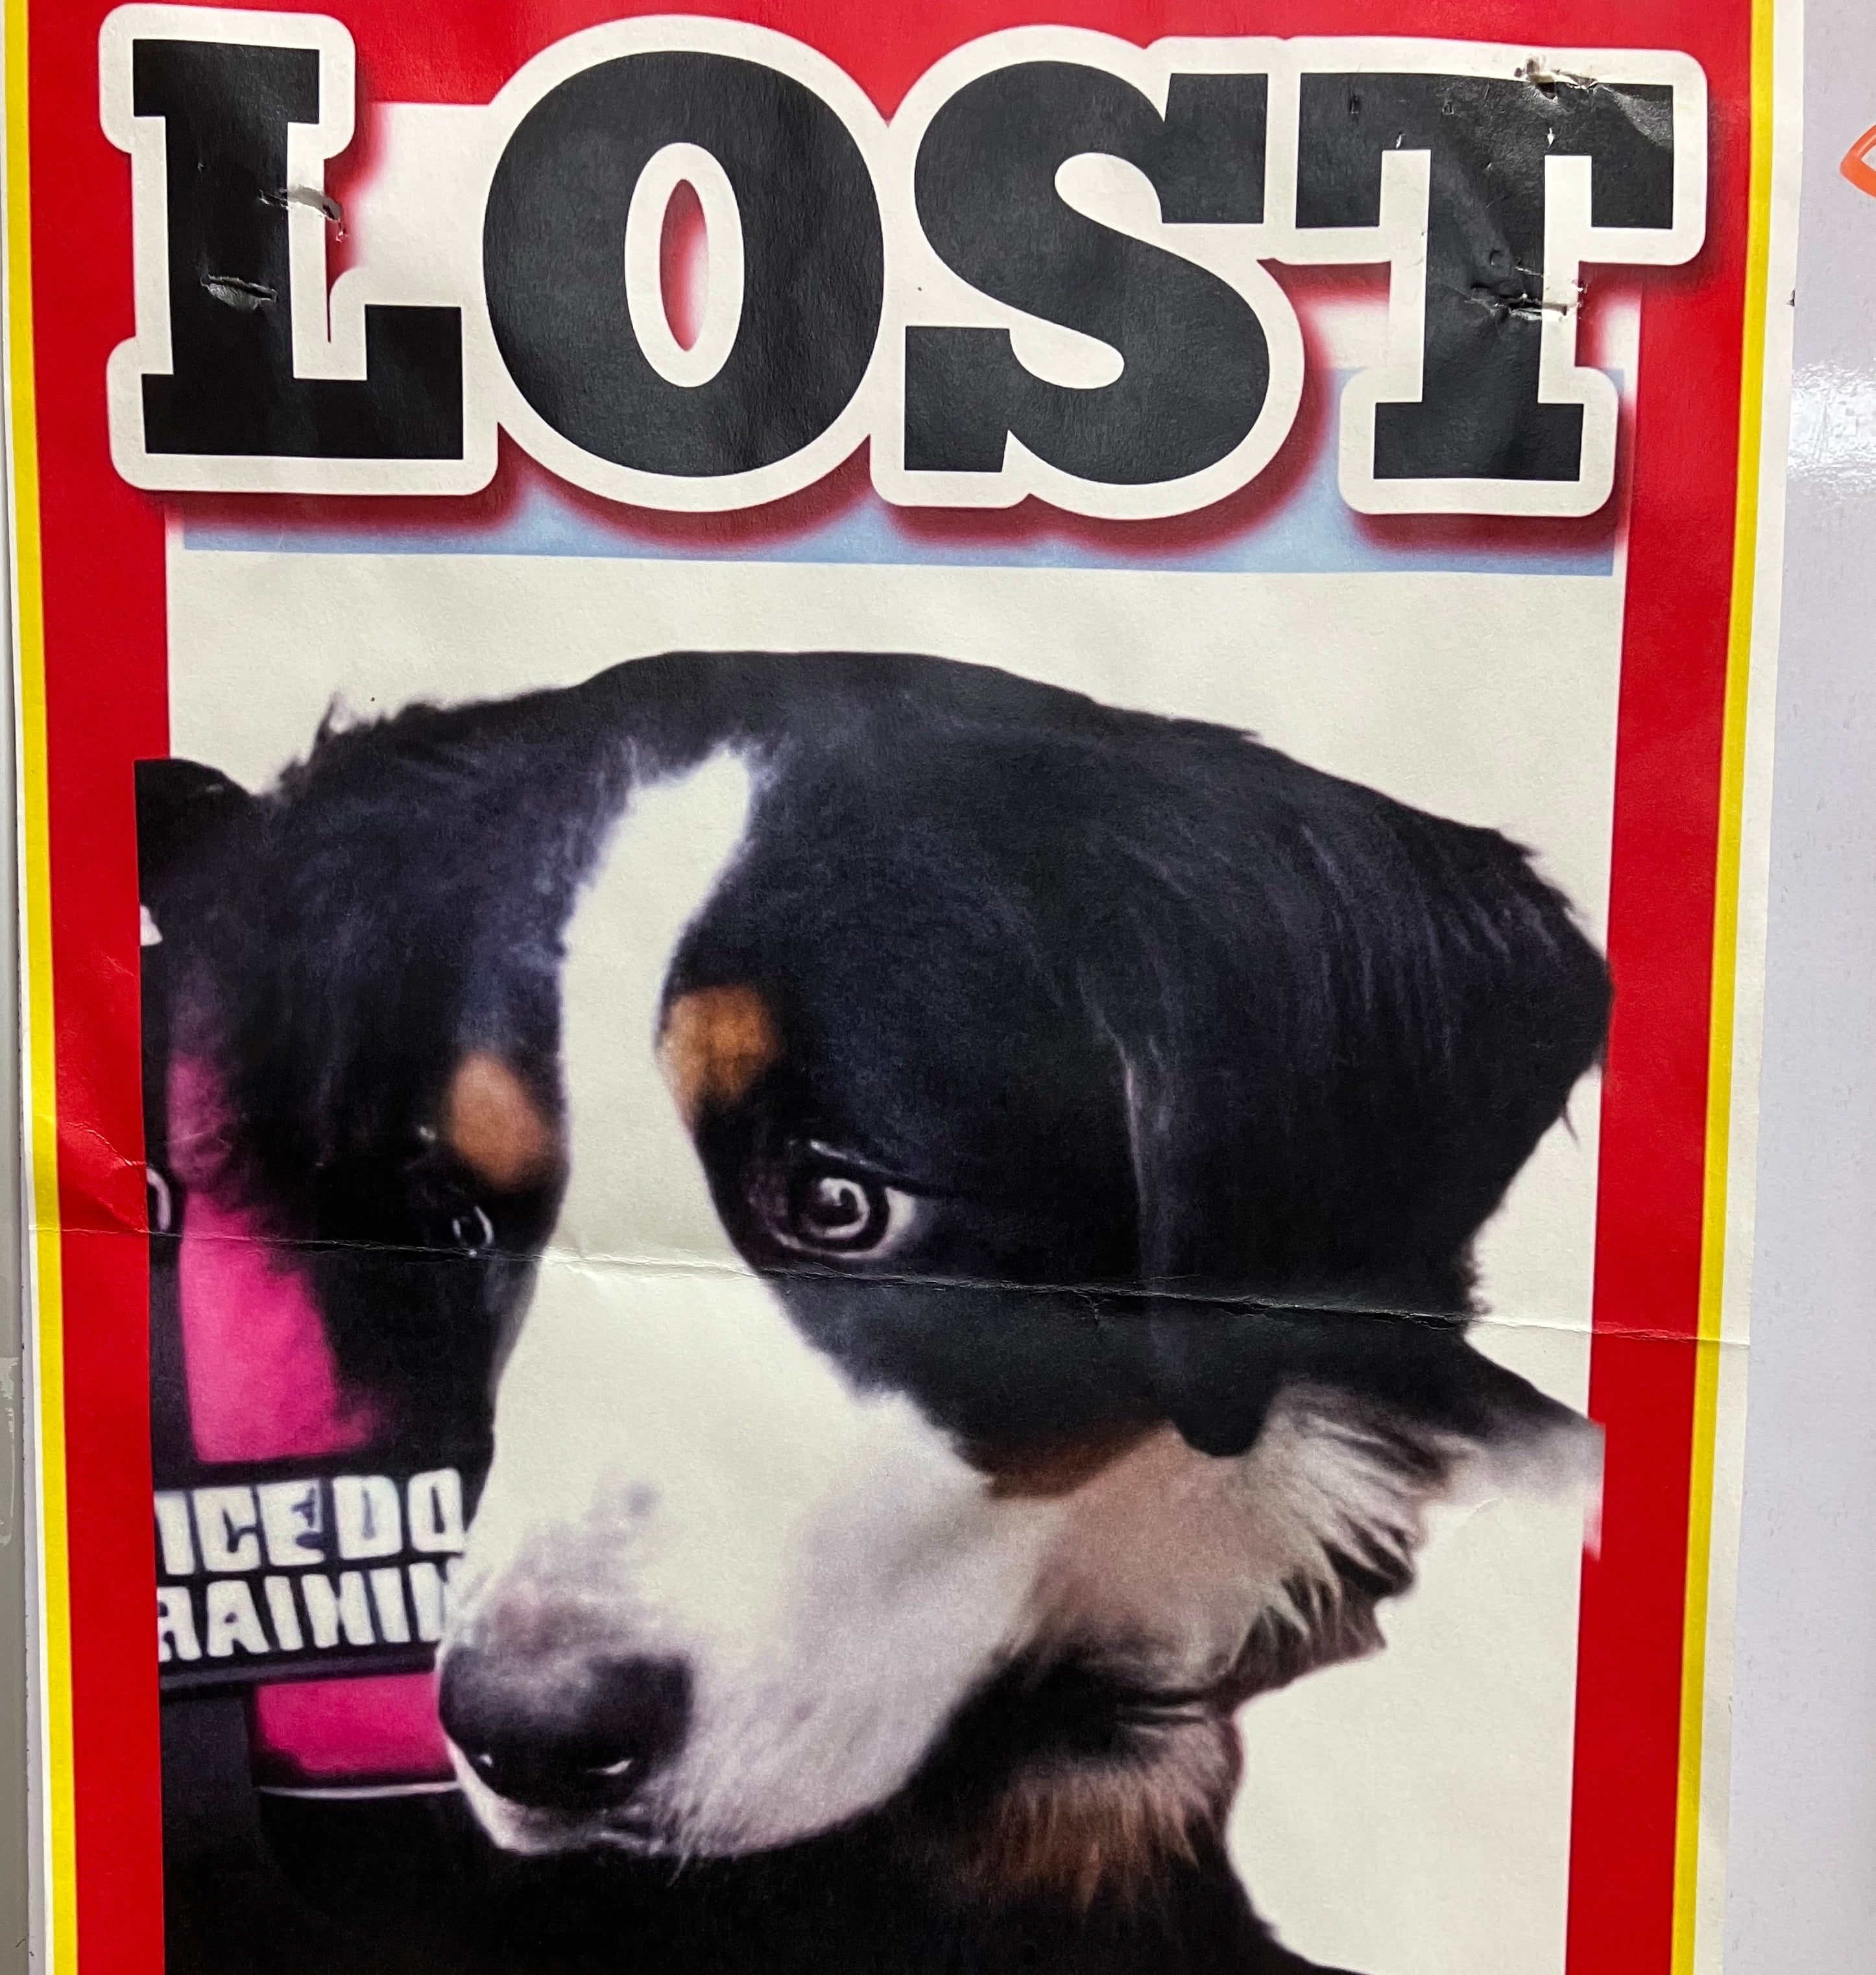 A missing poster for Nova